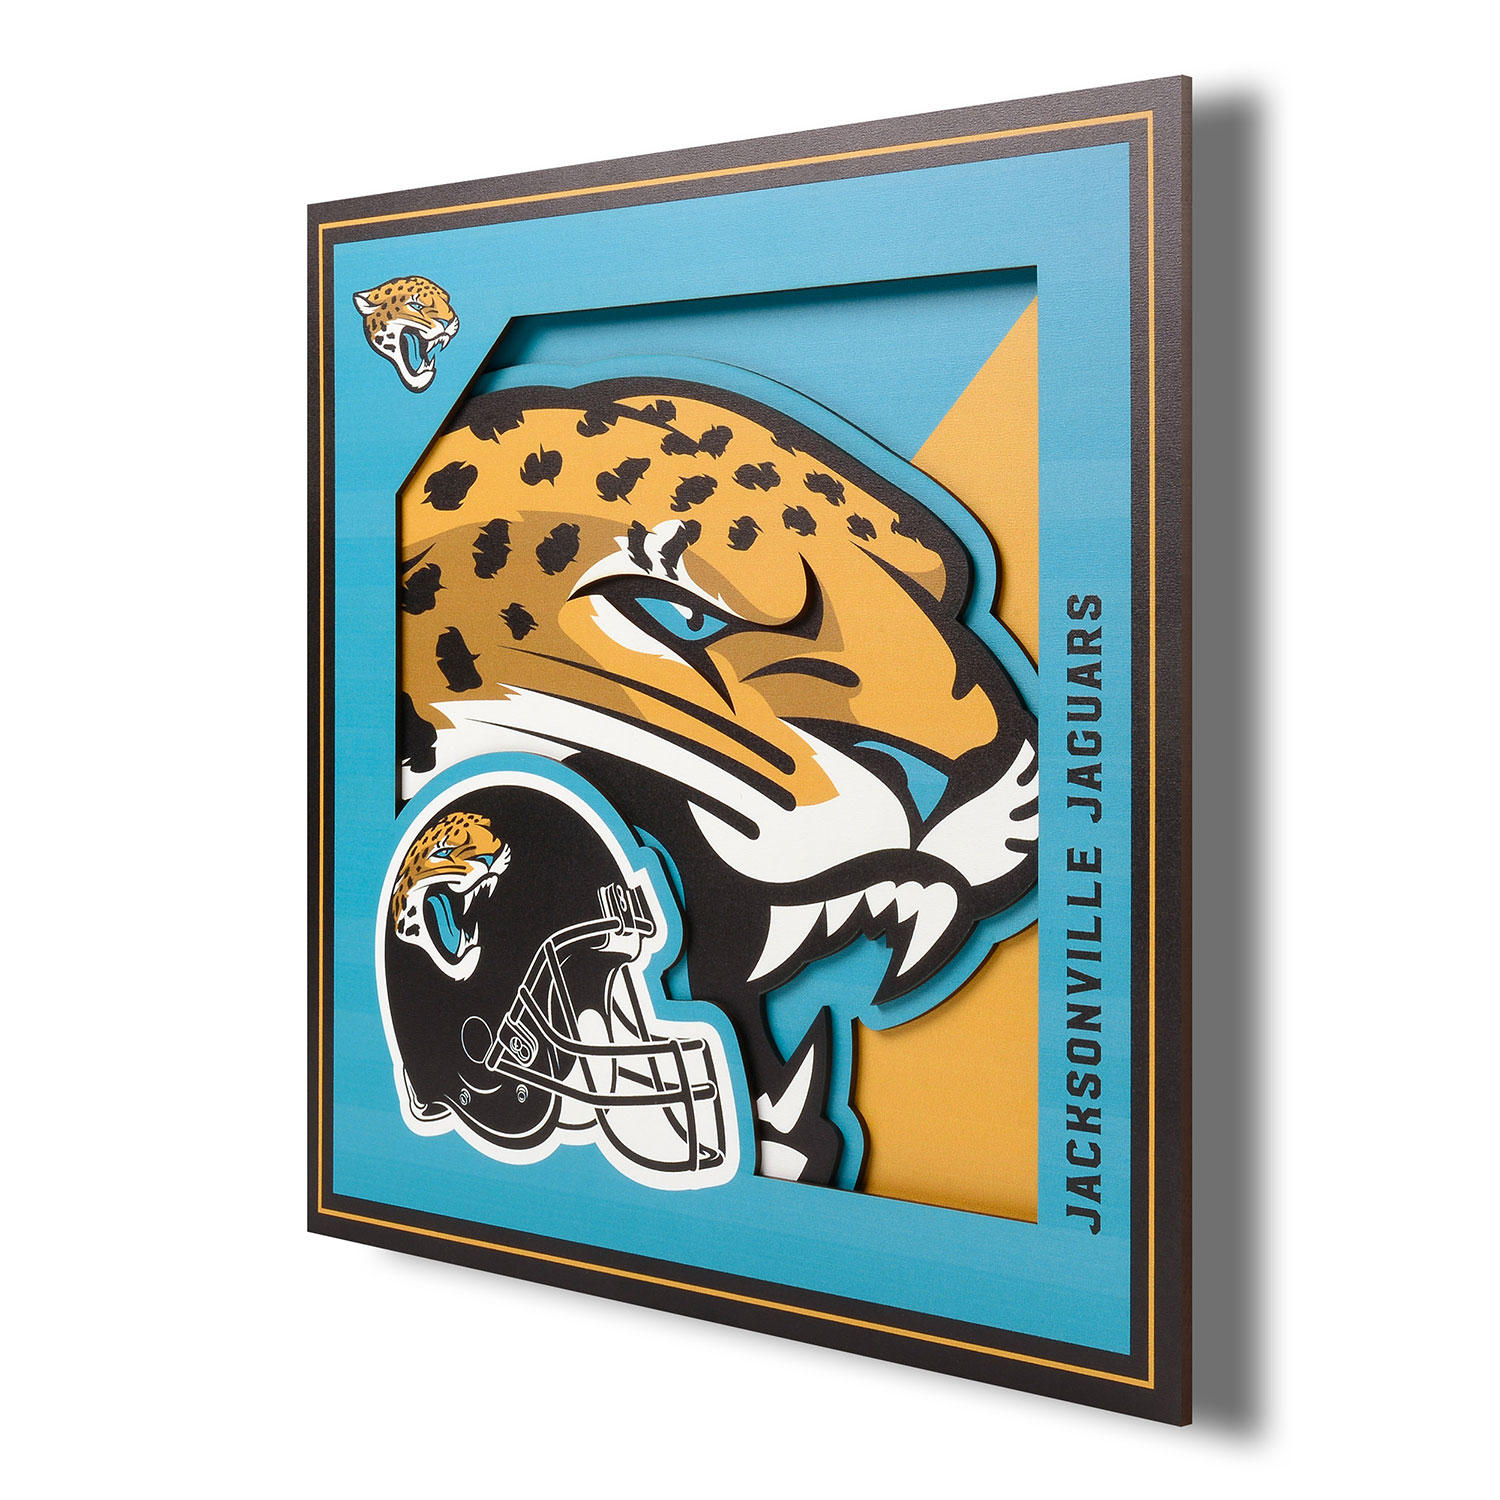 NFL 3D Logo Wall Art 12X12 - Jacksonville Jaguars